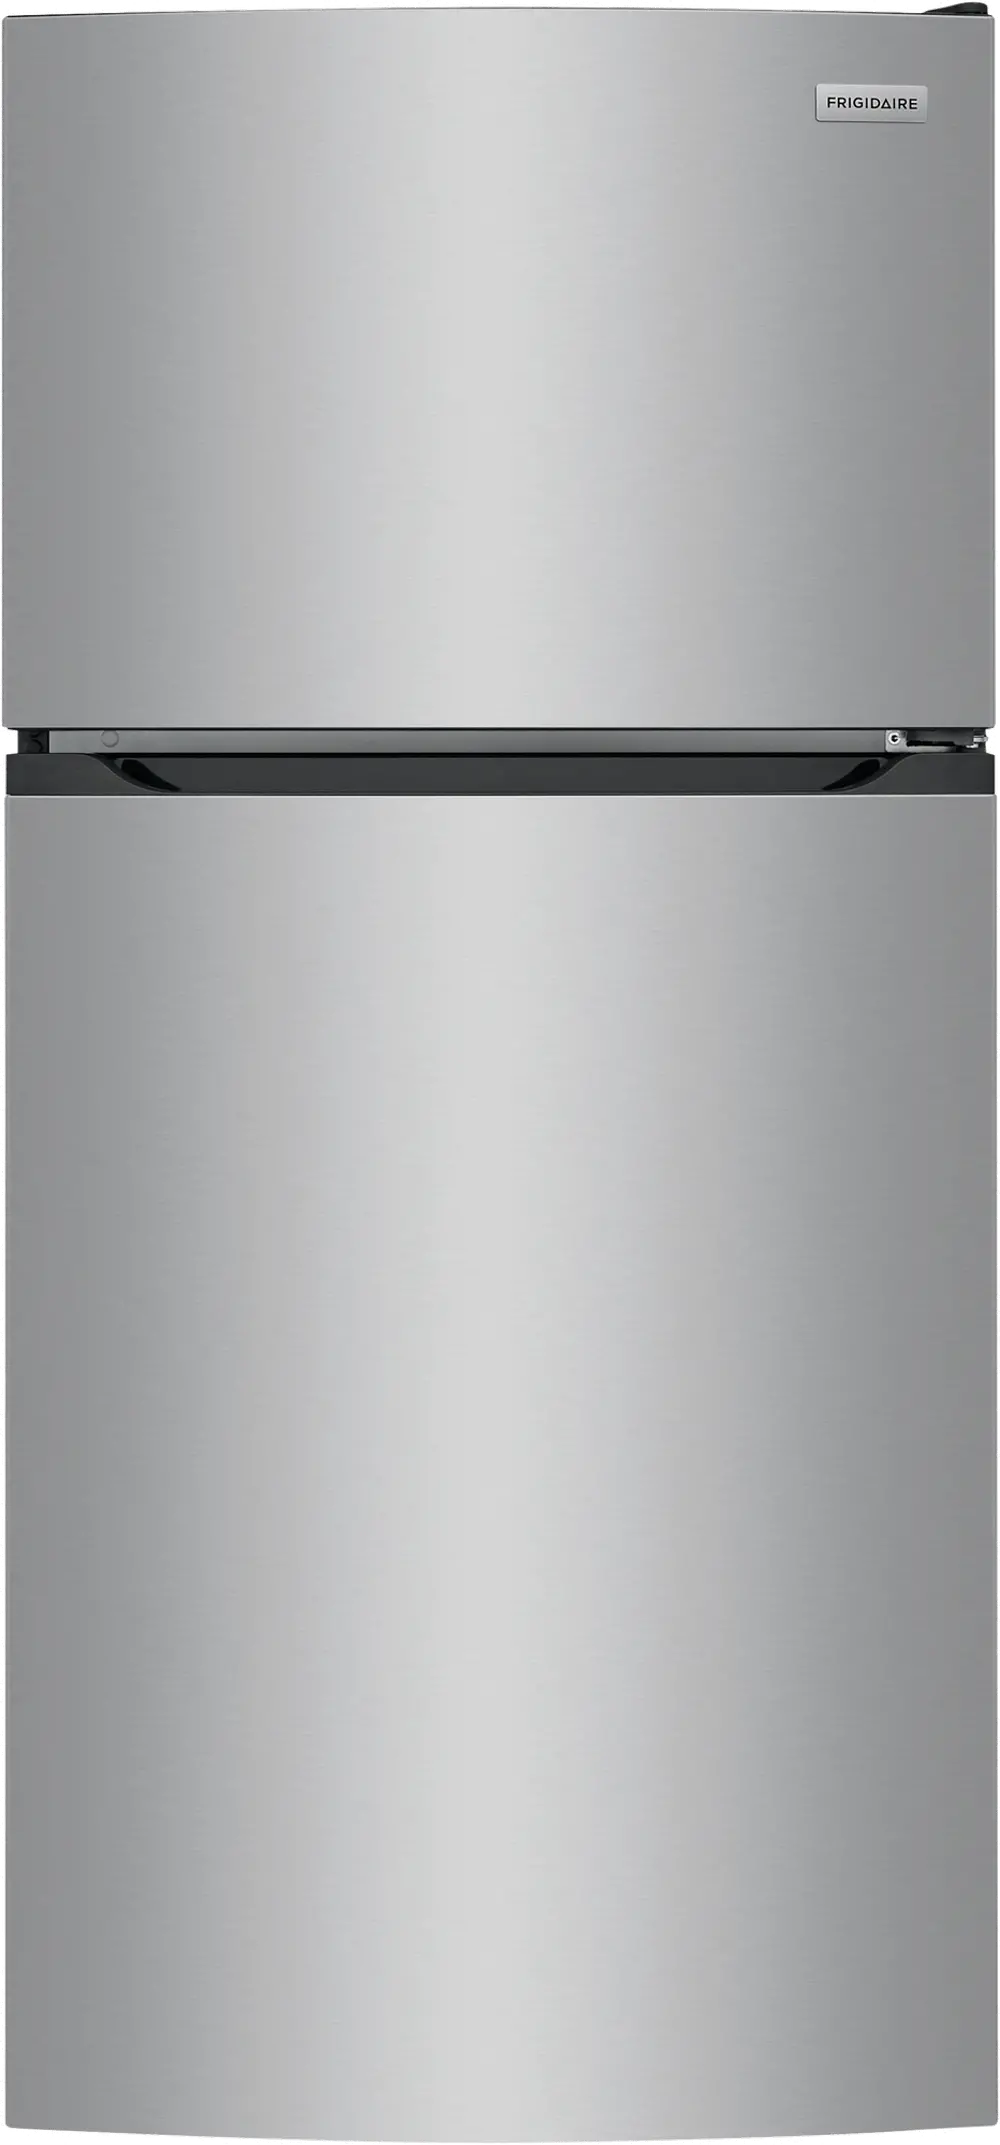 FFHT1425VV Frigidaire 13.9 cu ft Top Freezer Refrigerator - 28 W Brushed Steel-1